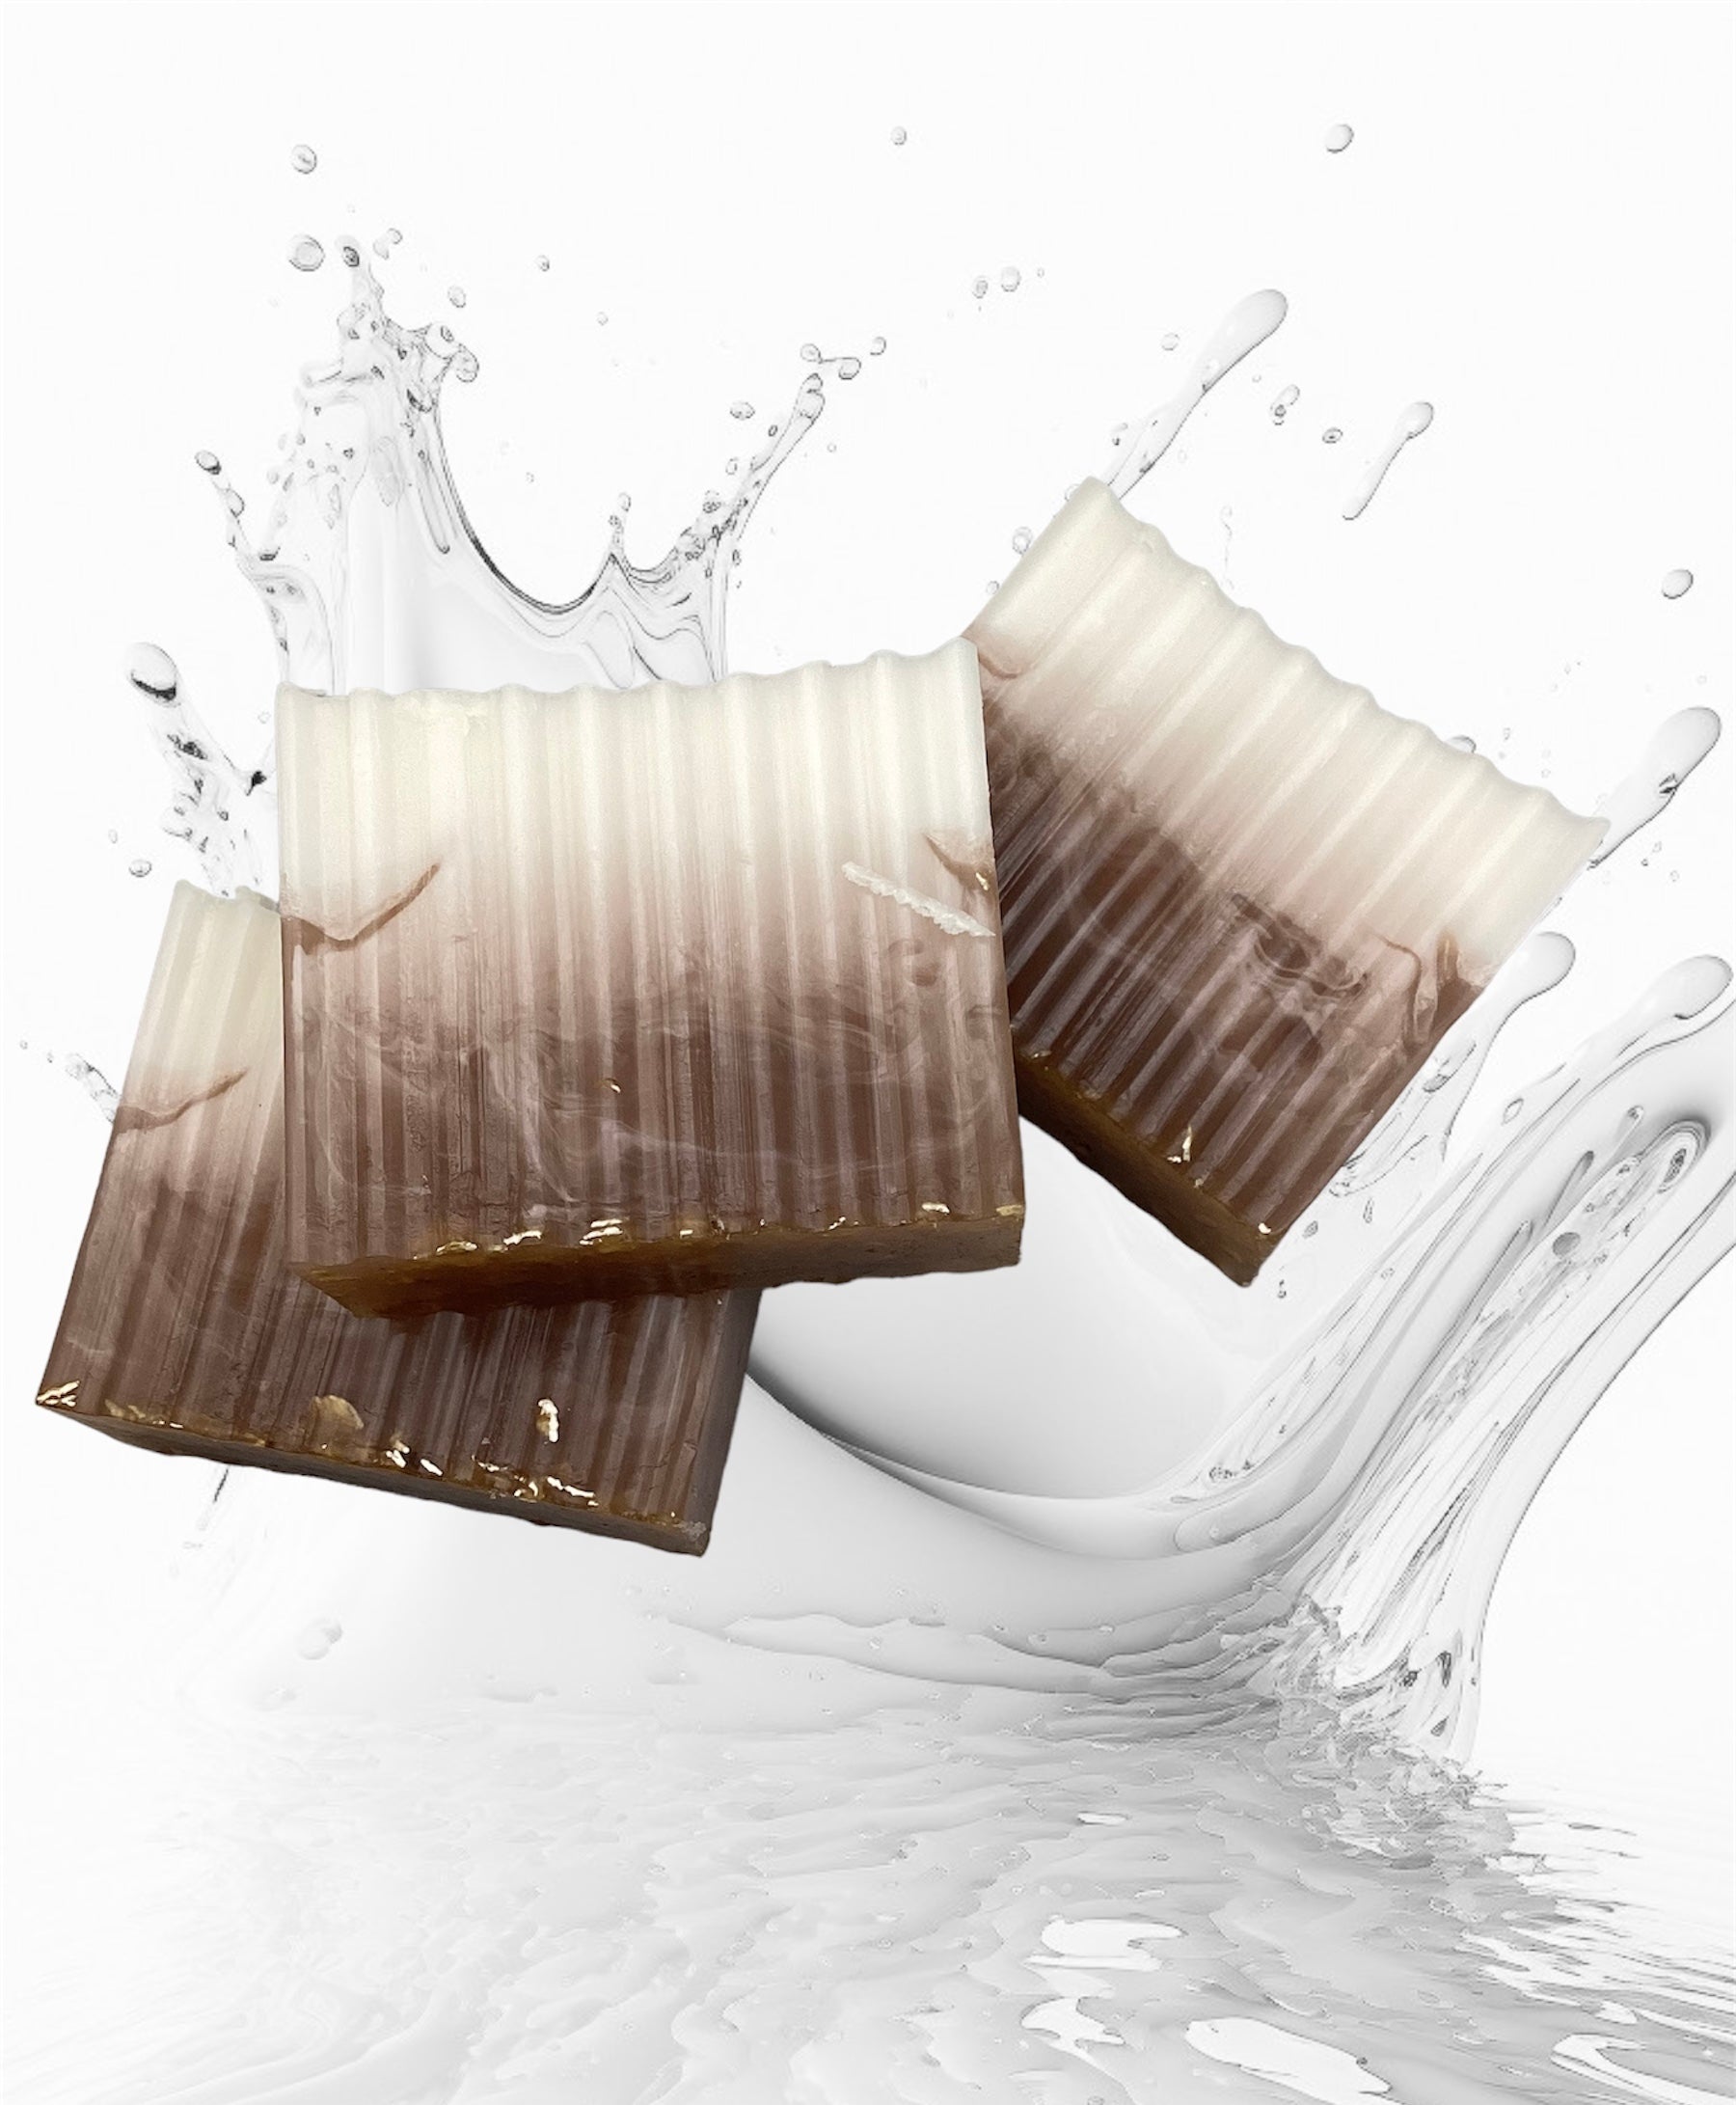 Oatmeal "Eczema" Soap